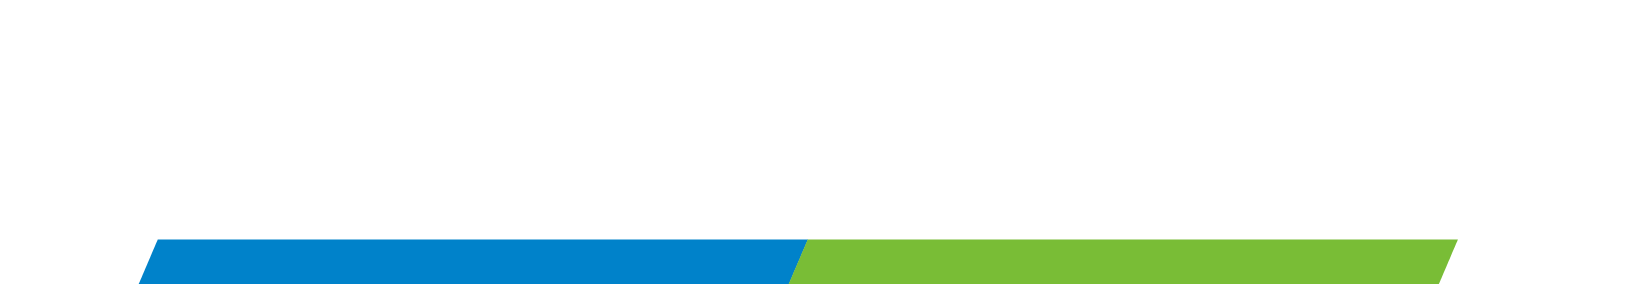 Sega Sammy Holdings Logo groß für dunkle Hintergründe (transparentes PNG)